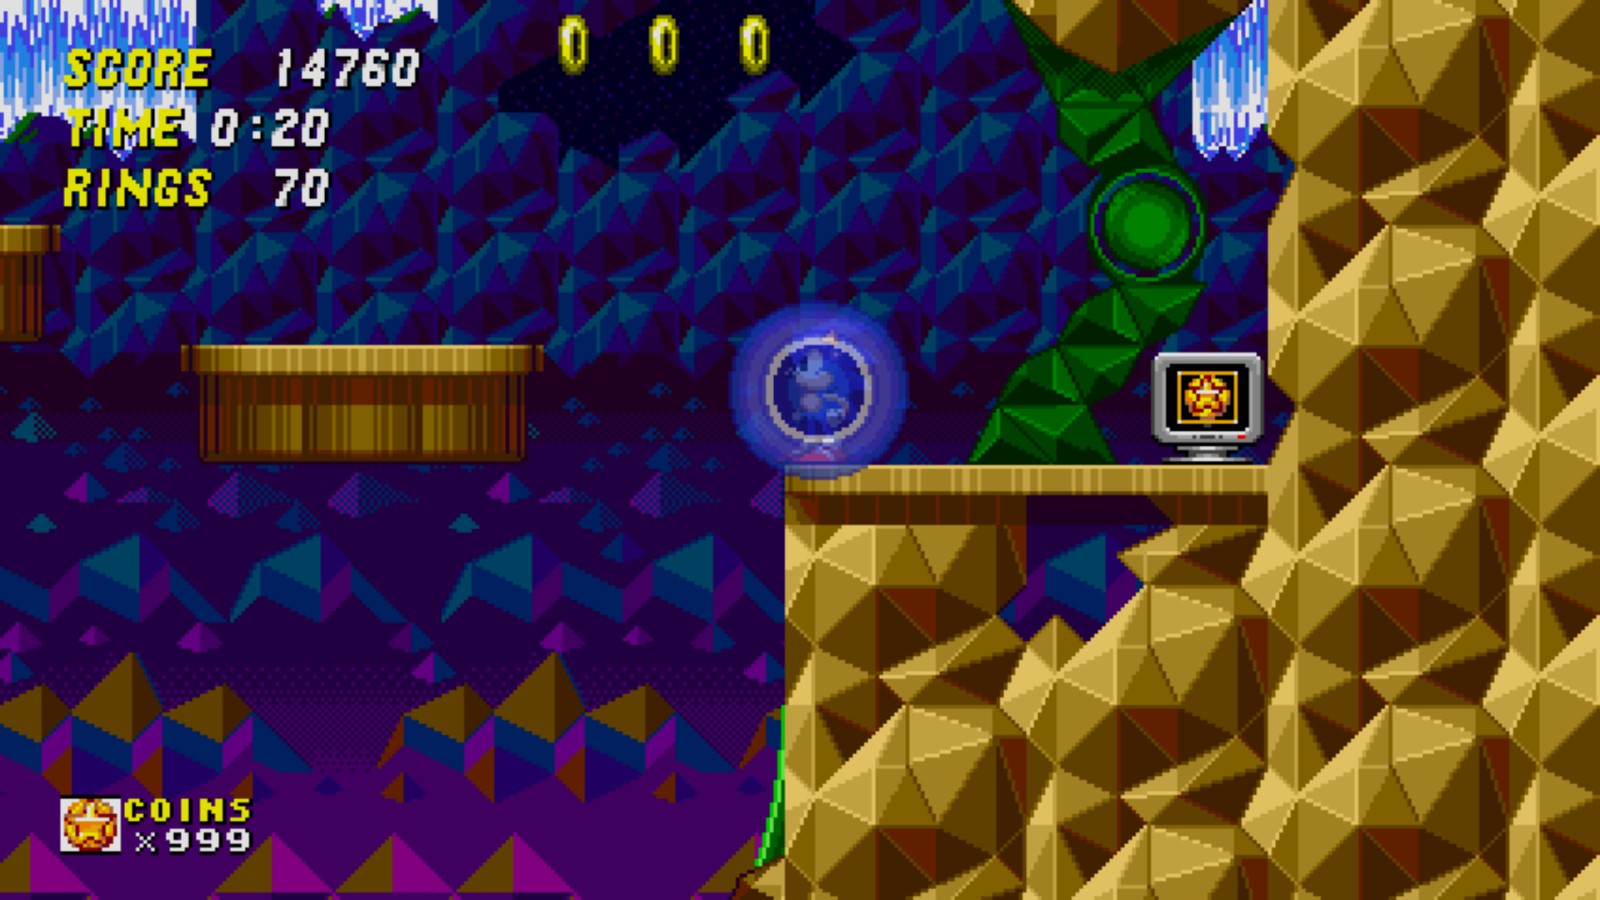 Sonic the Hedgehog (Prototype) - Hidden Palace